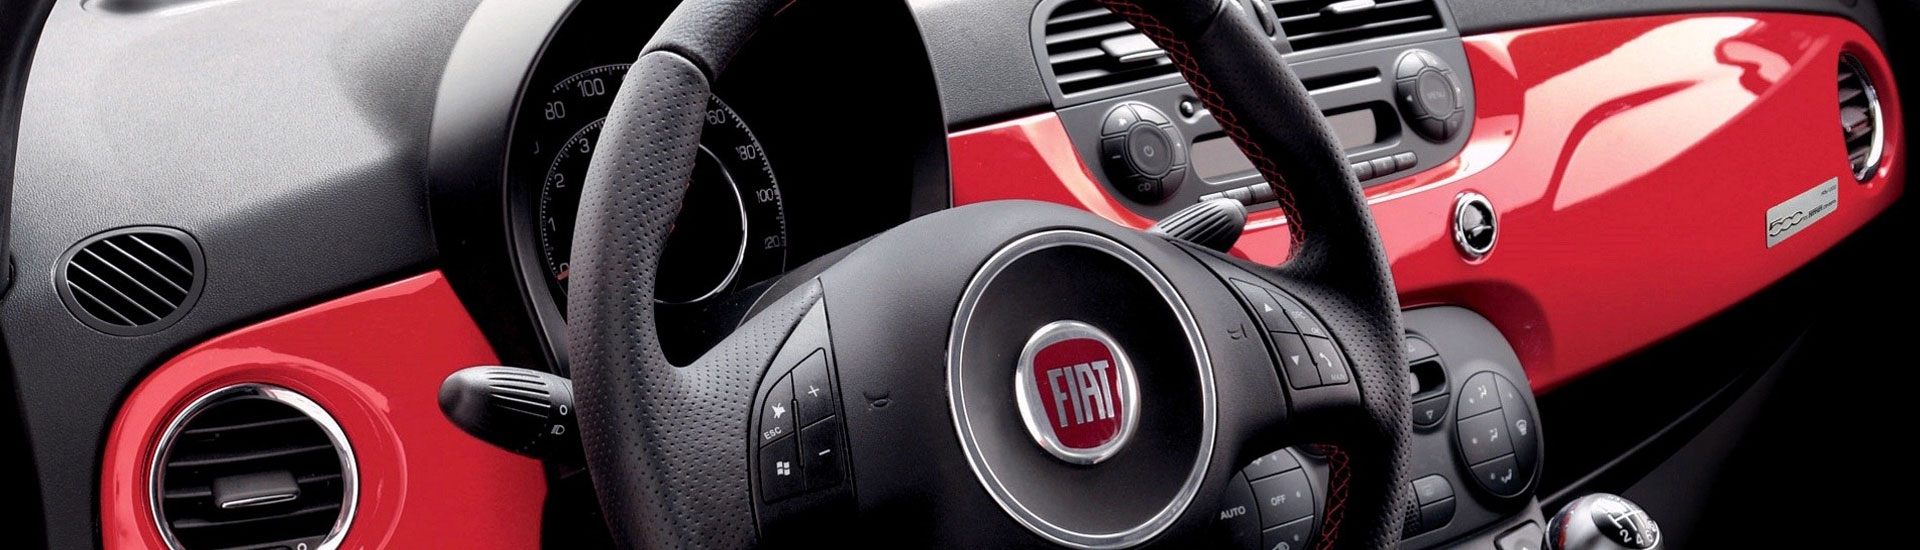 2012 Fiat 500 Abarth Custom Dash Kits